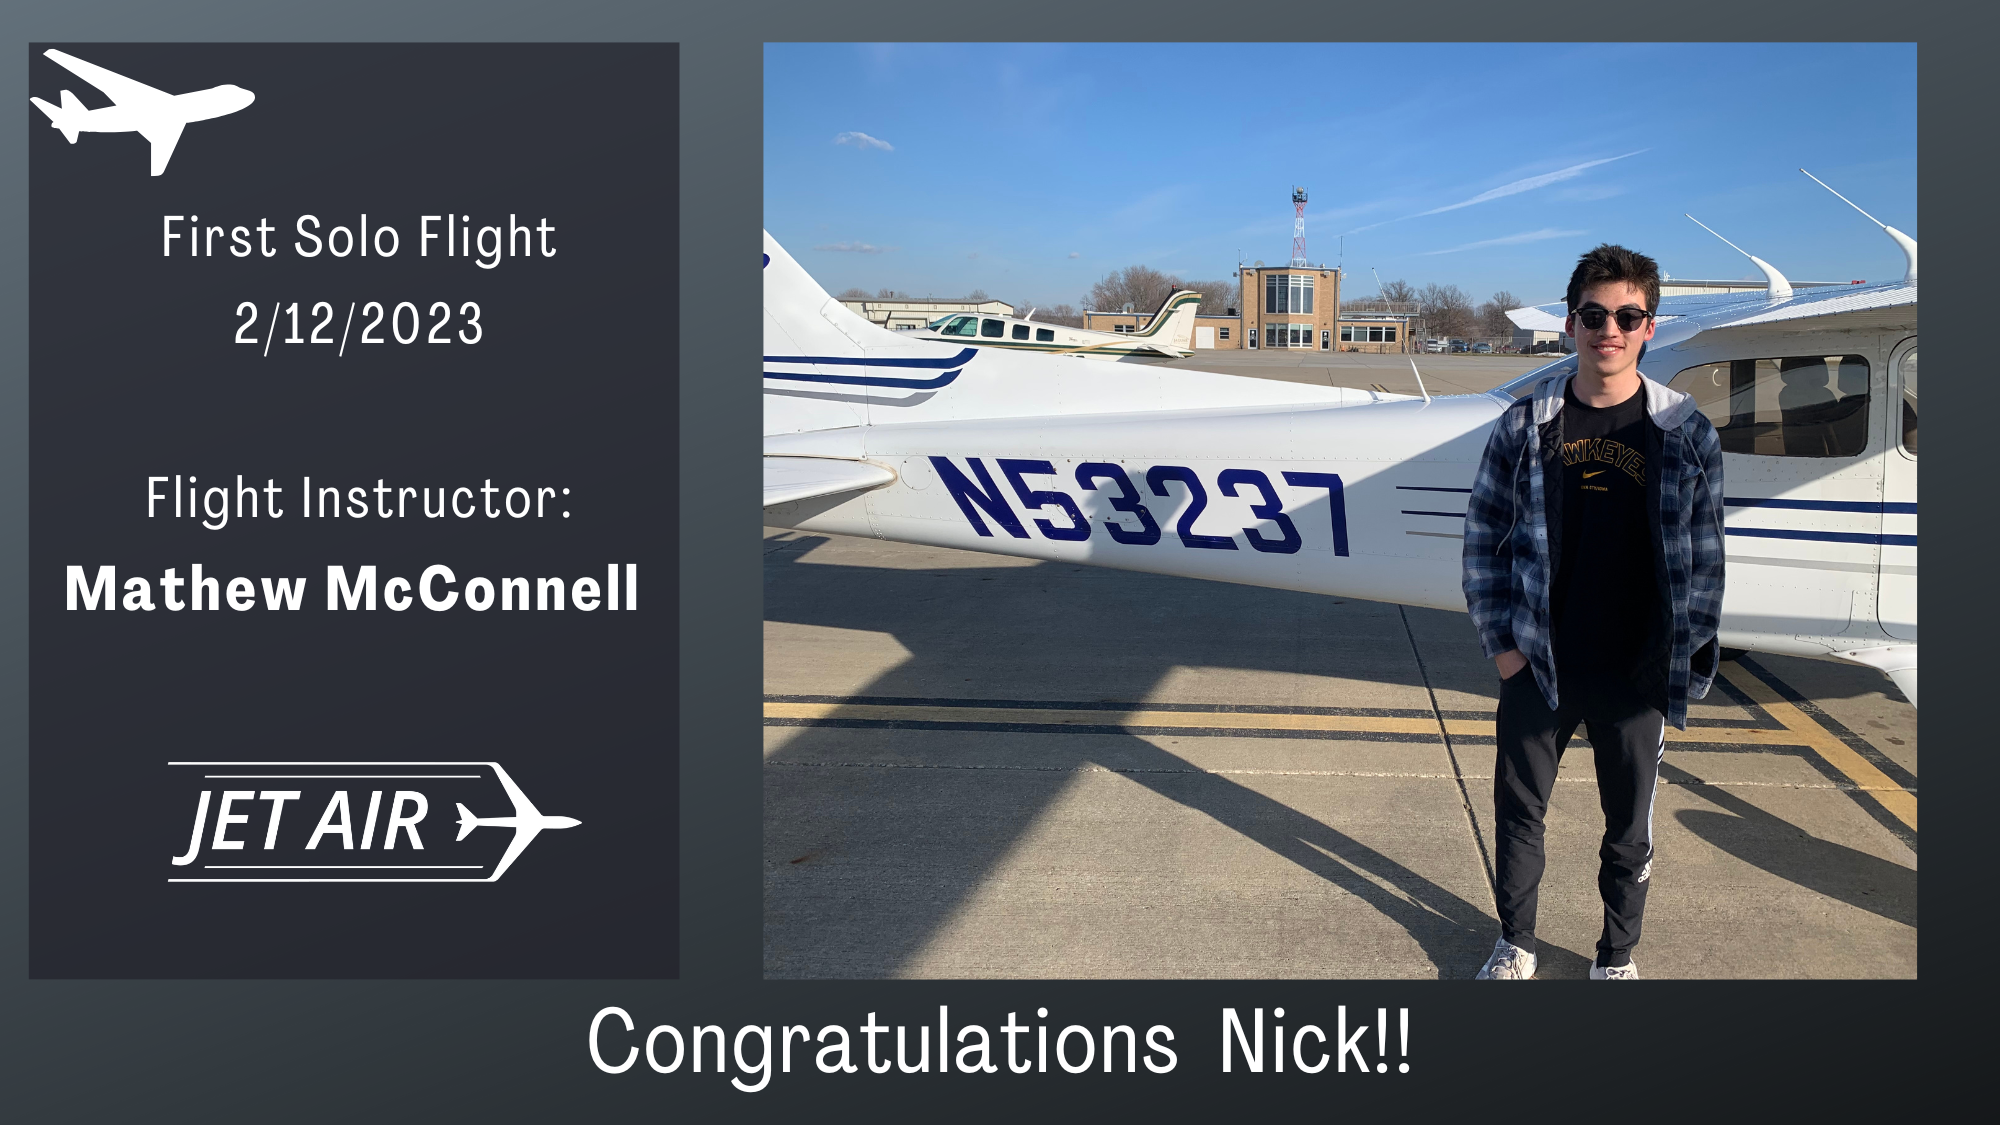 First Solo Flight Nick Feller!